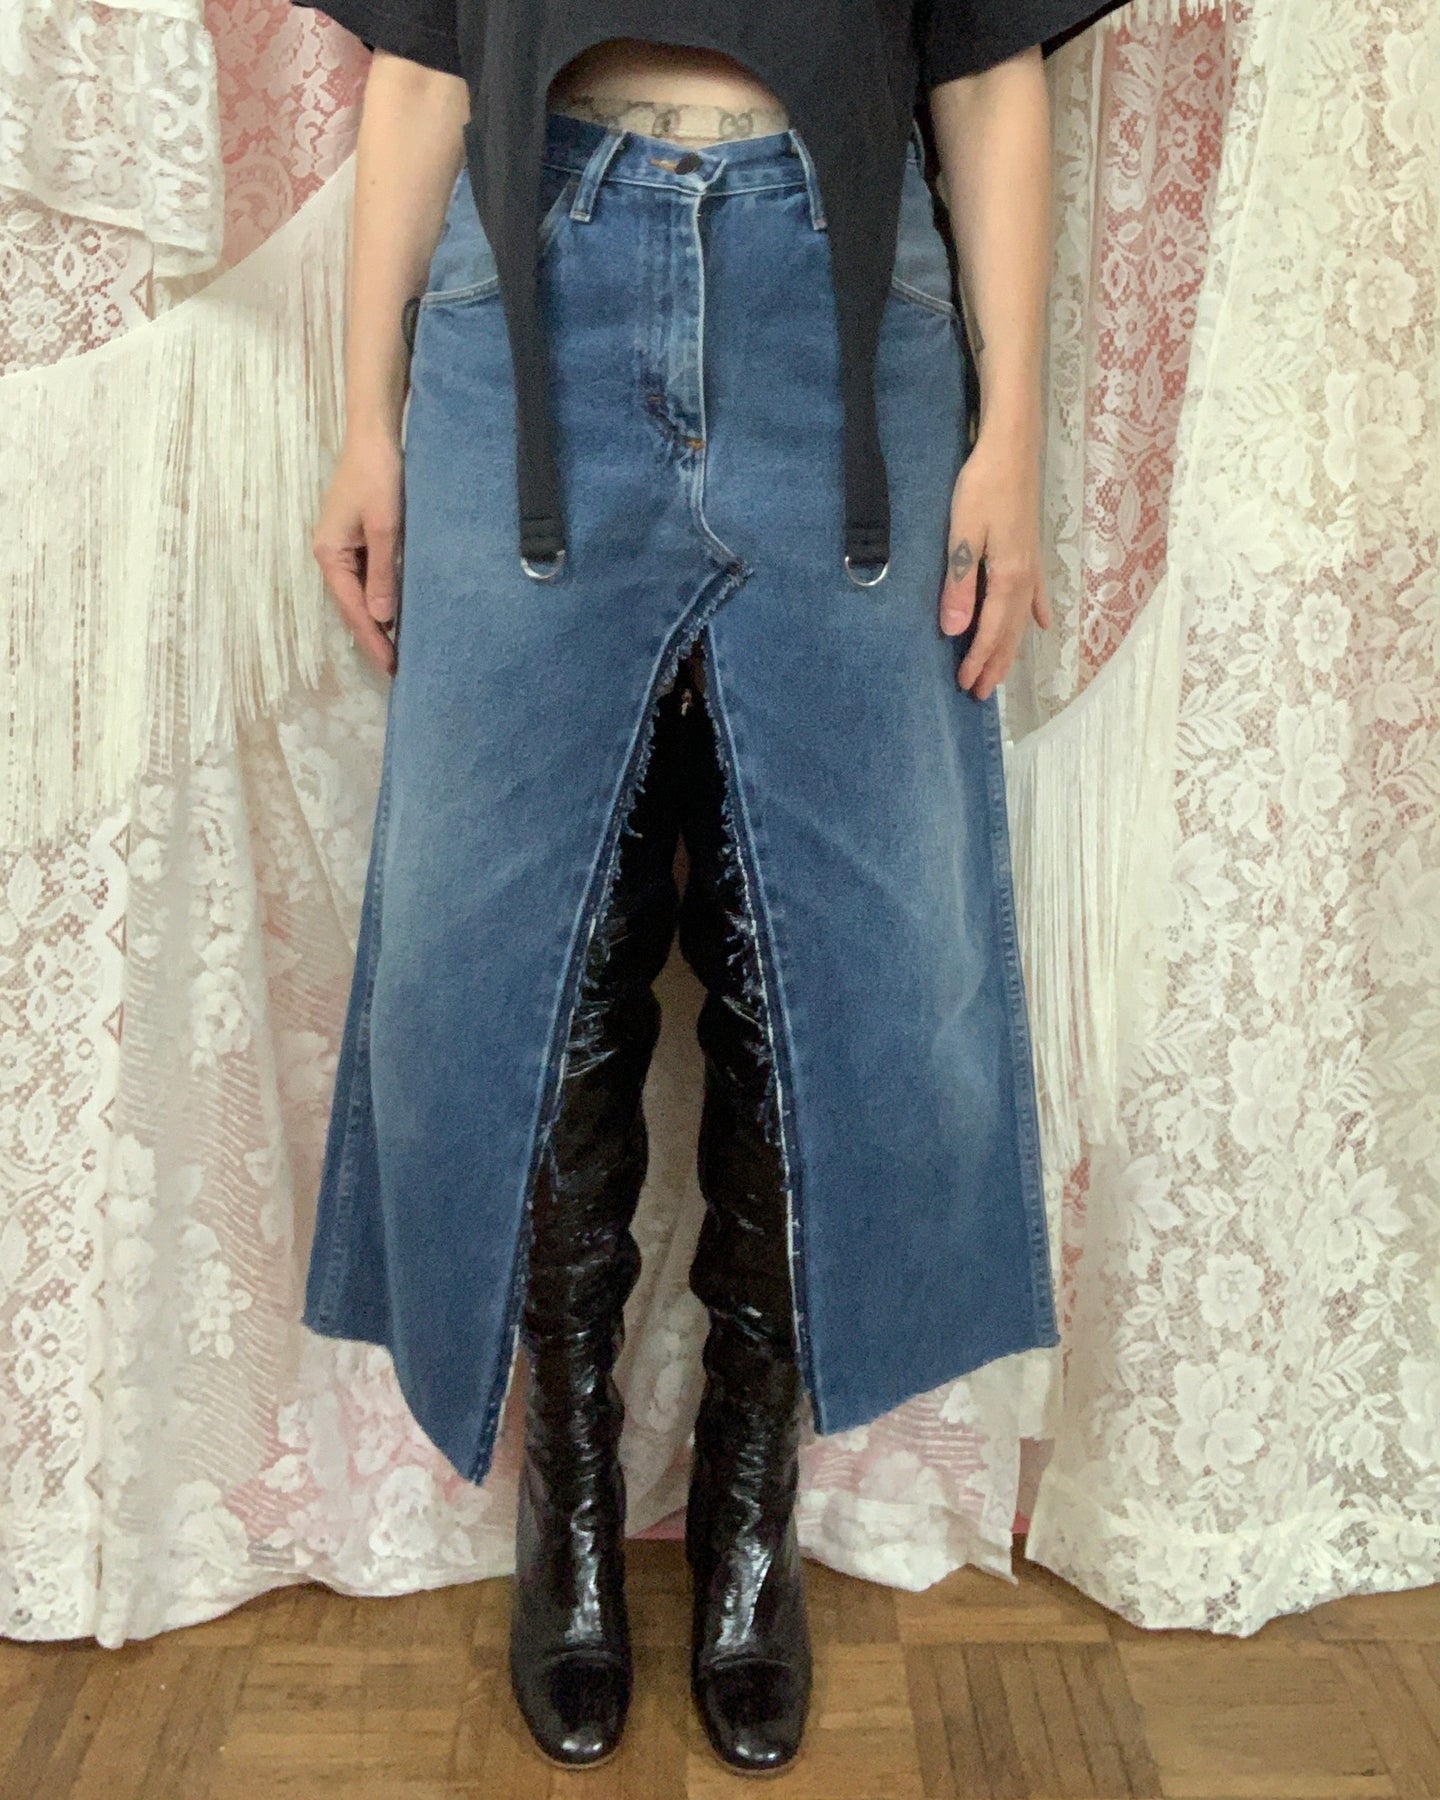 Custom transformed jean skirt